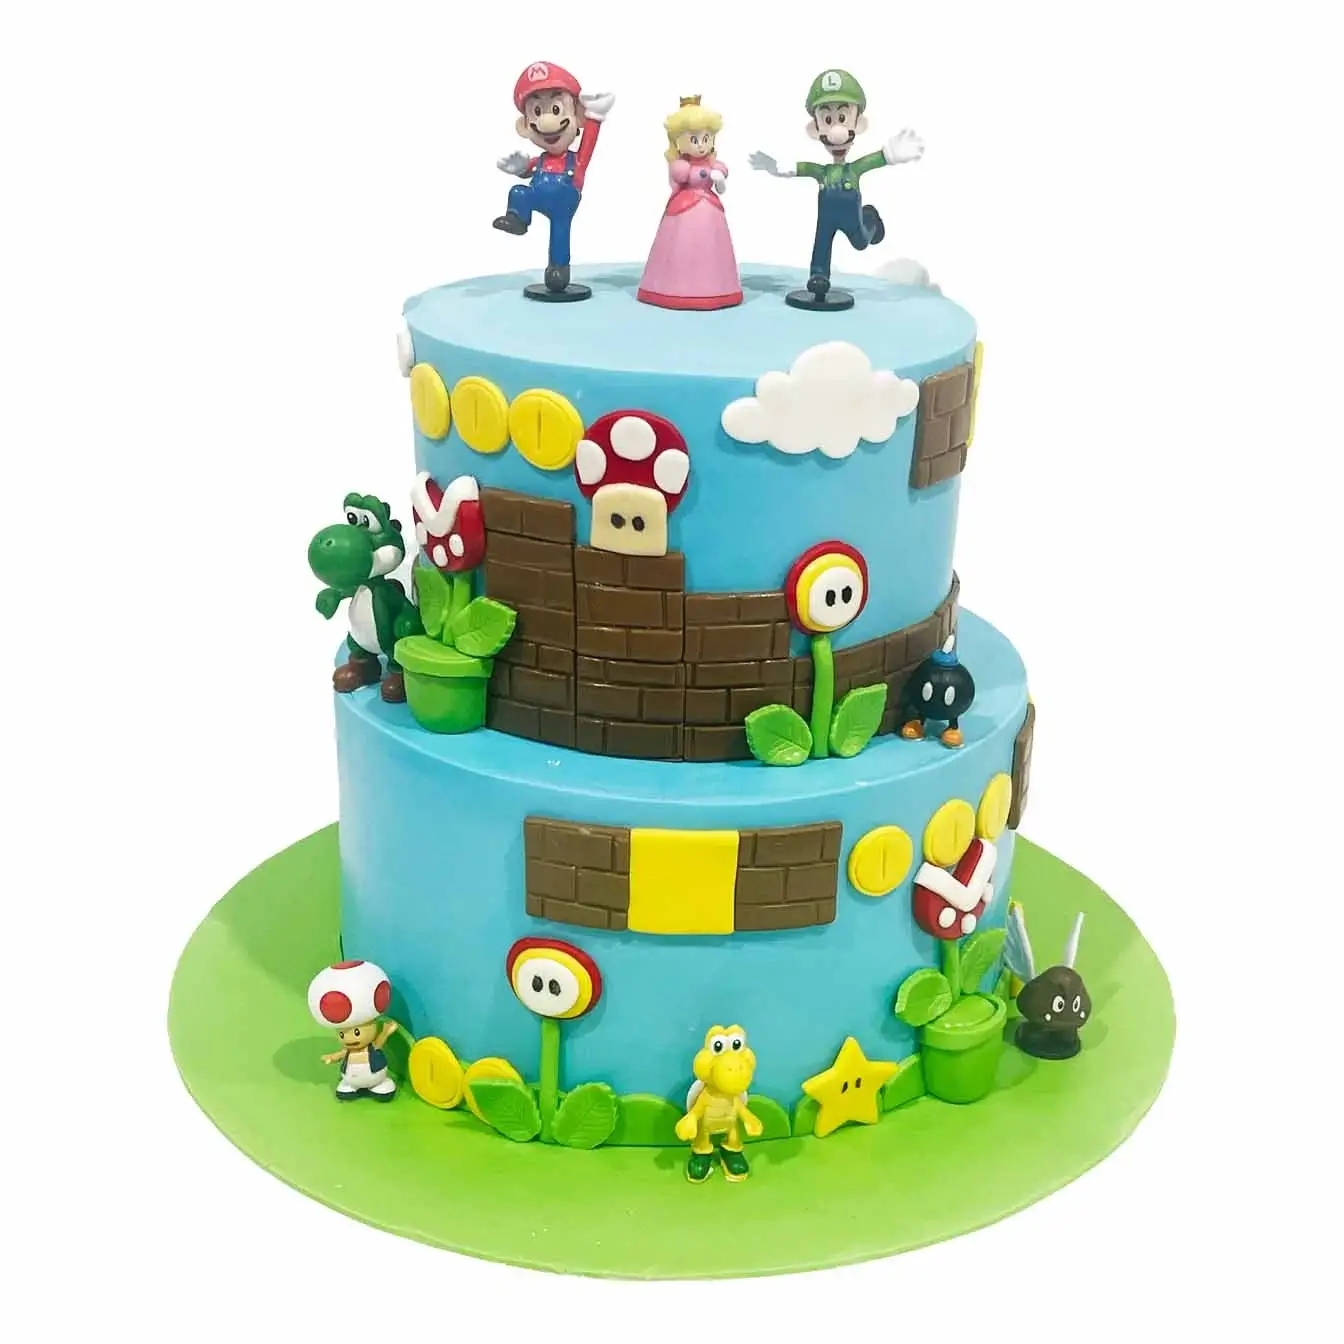 Two-Tier Super Mario Bros Fondant Cake - A delightful gaming-themed centerpiece for joyful celebrations.